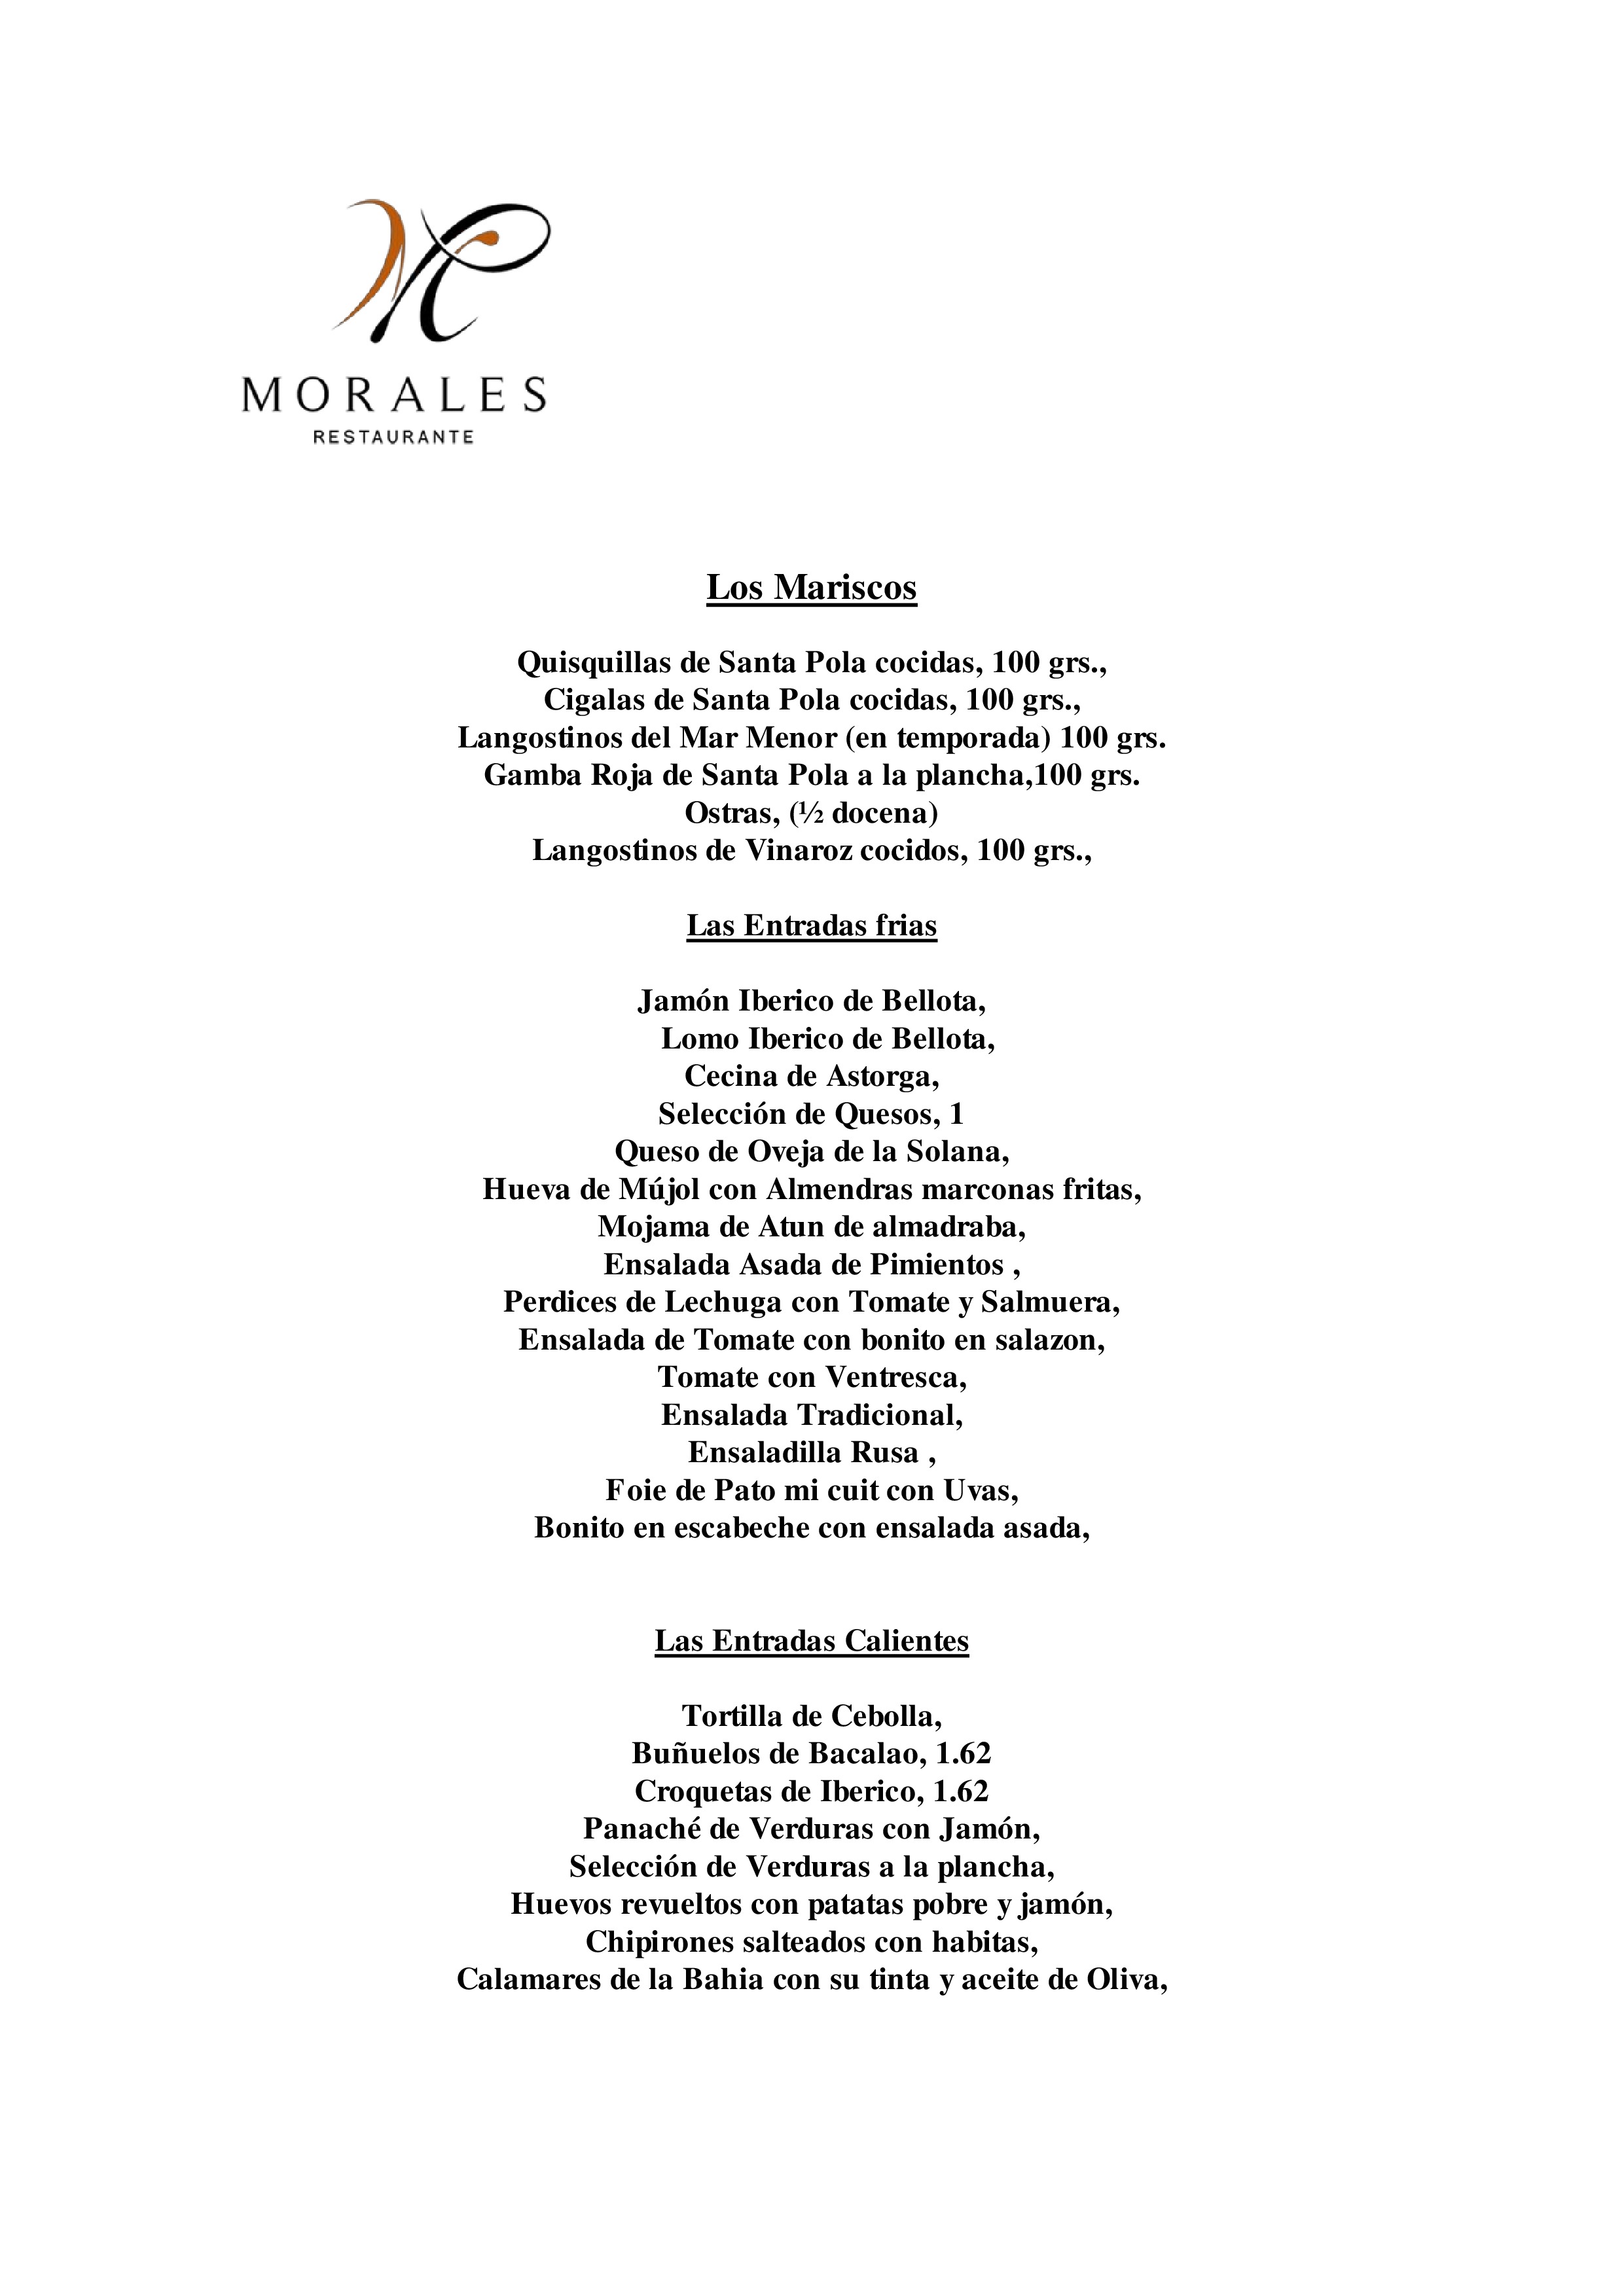 Morales Carta